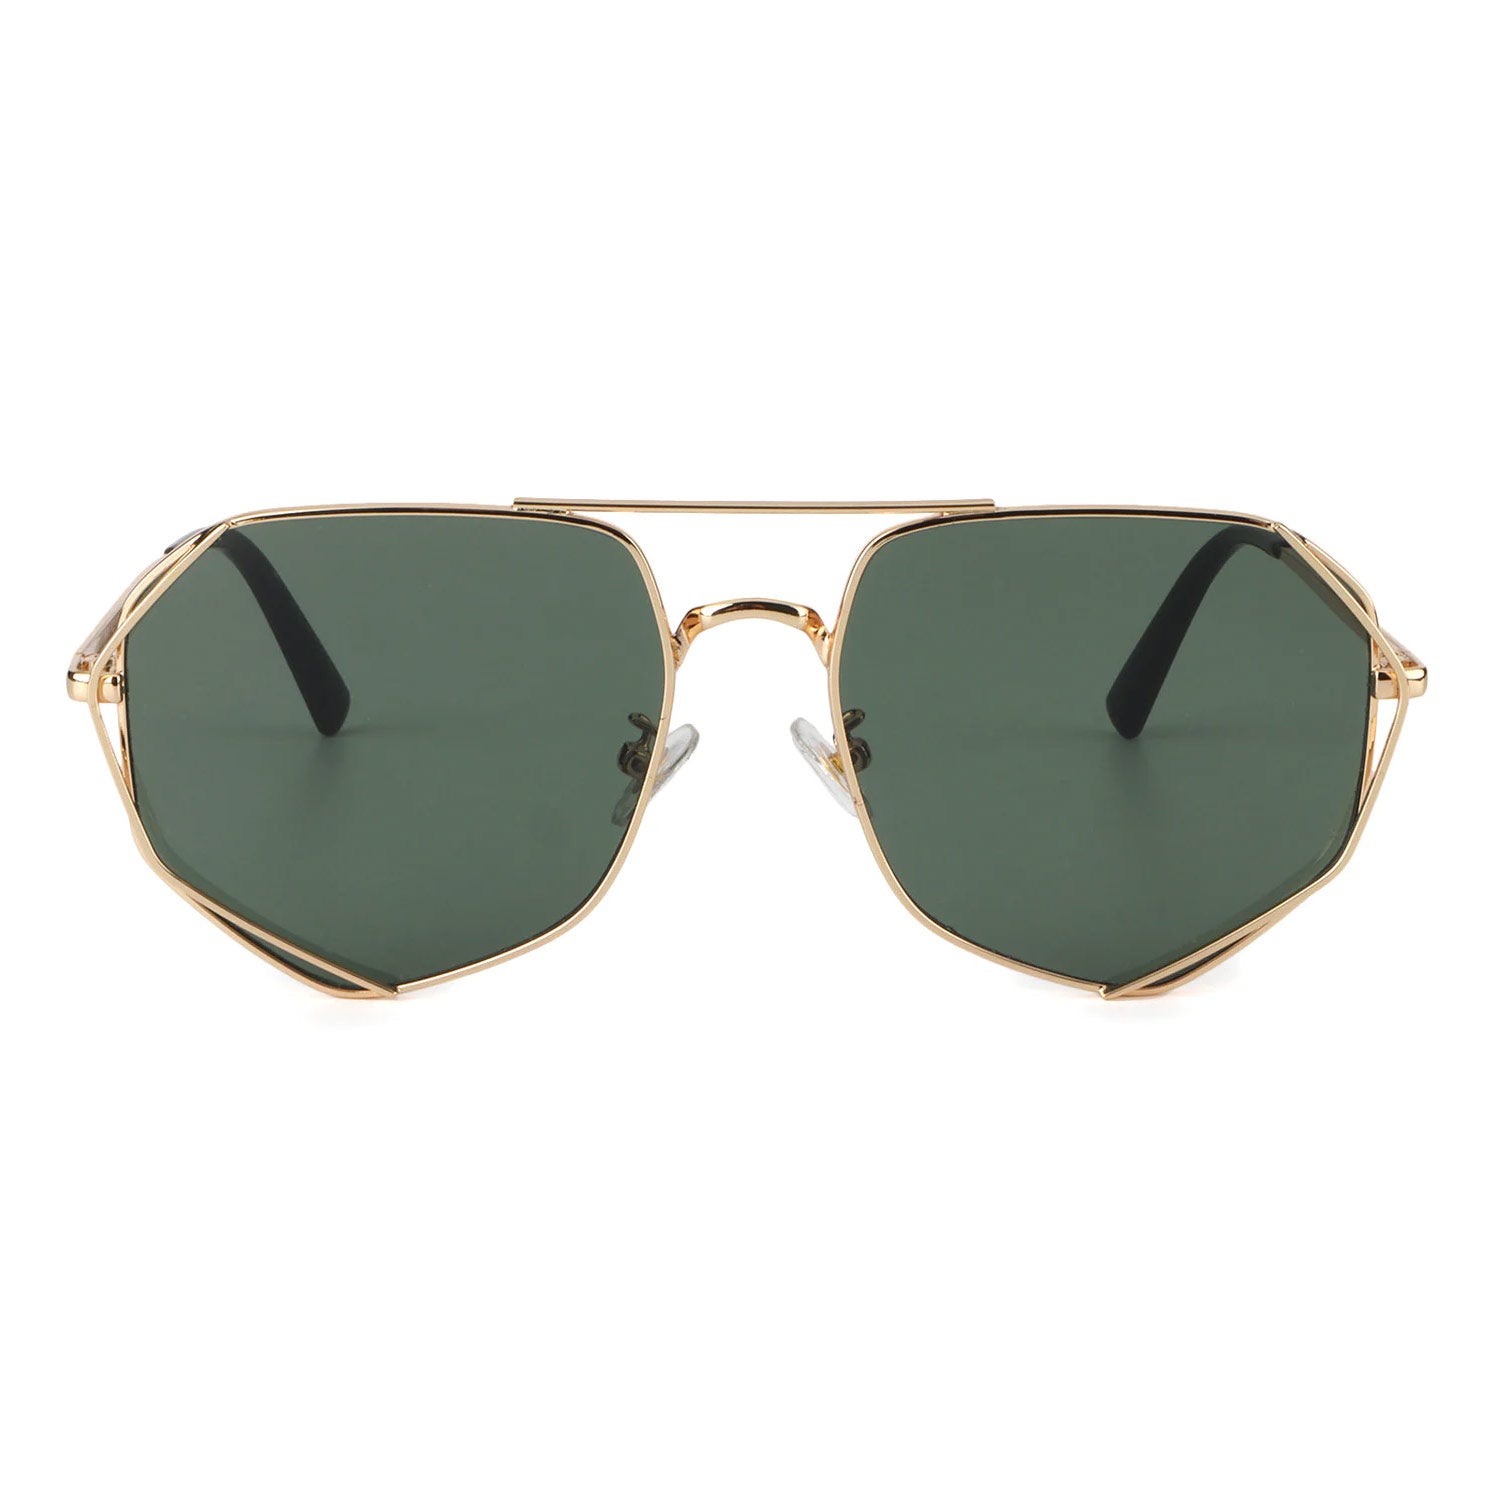 ELKLOOK Aviator Polarized Sunglasses Designer Sunglasses for Men/Women 3-5 Day Rush Delivery